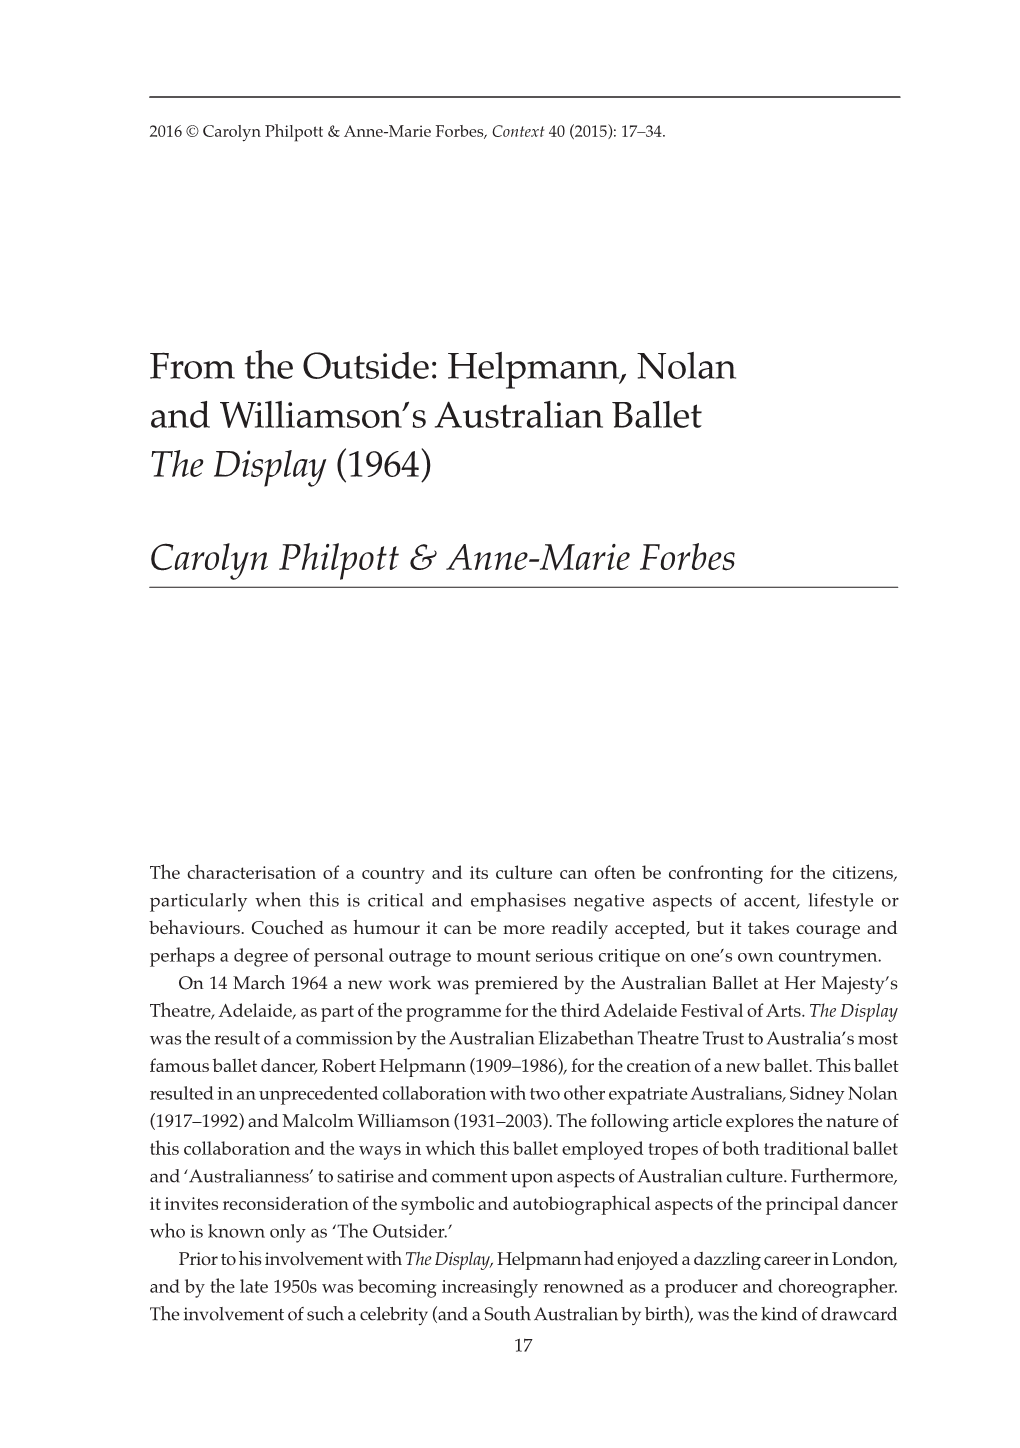 Helpmann, Nolan and Williamson's Australian Ballet the Display